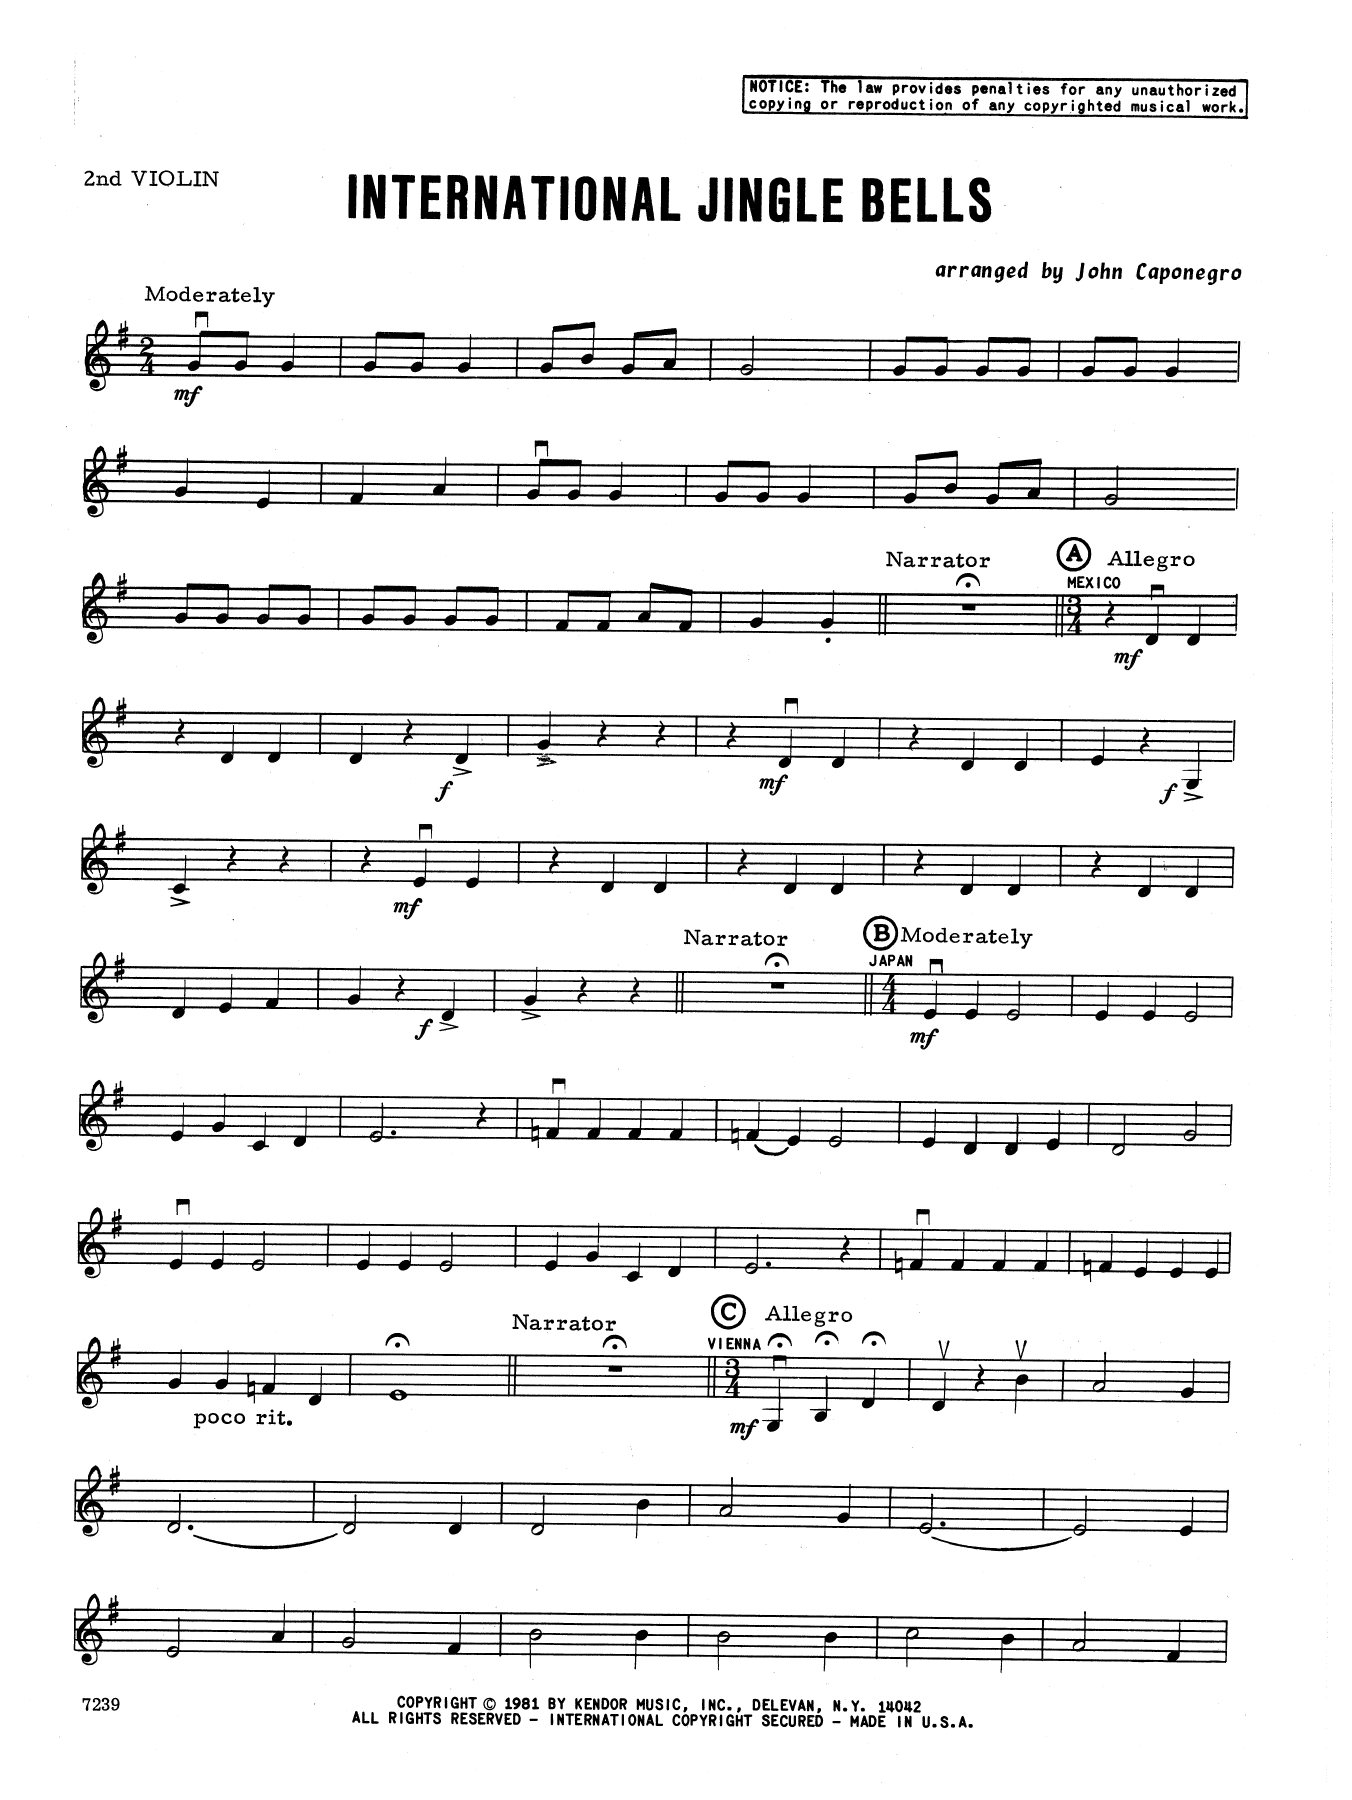 Download John Caponegro International Jingle Bells - 2nd Violin Sheet Music